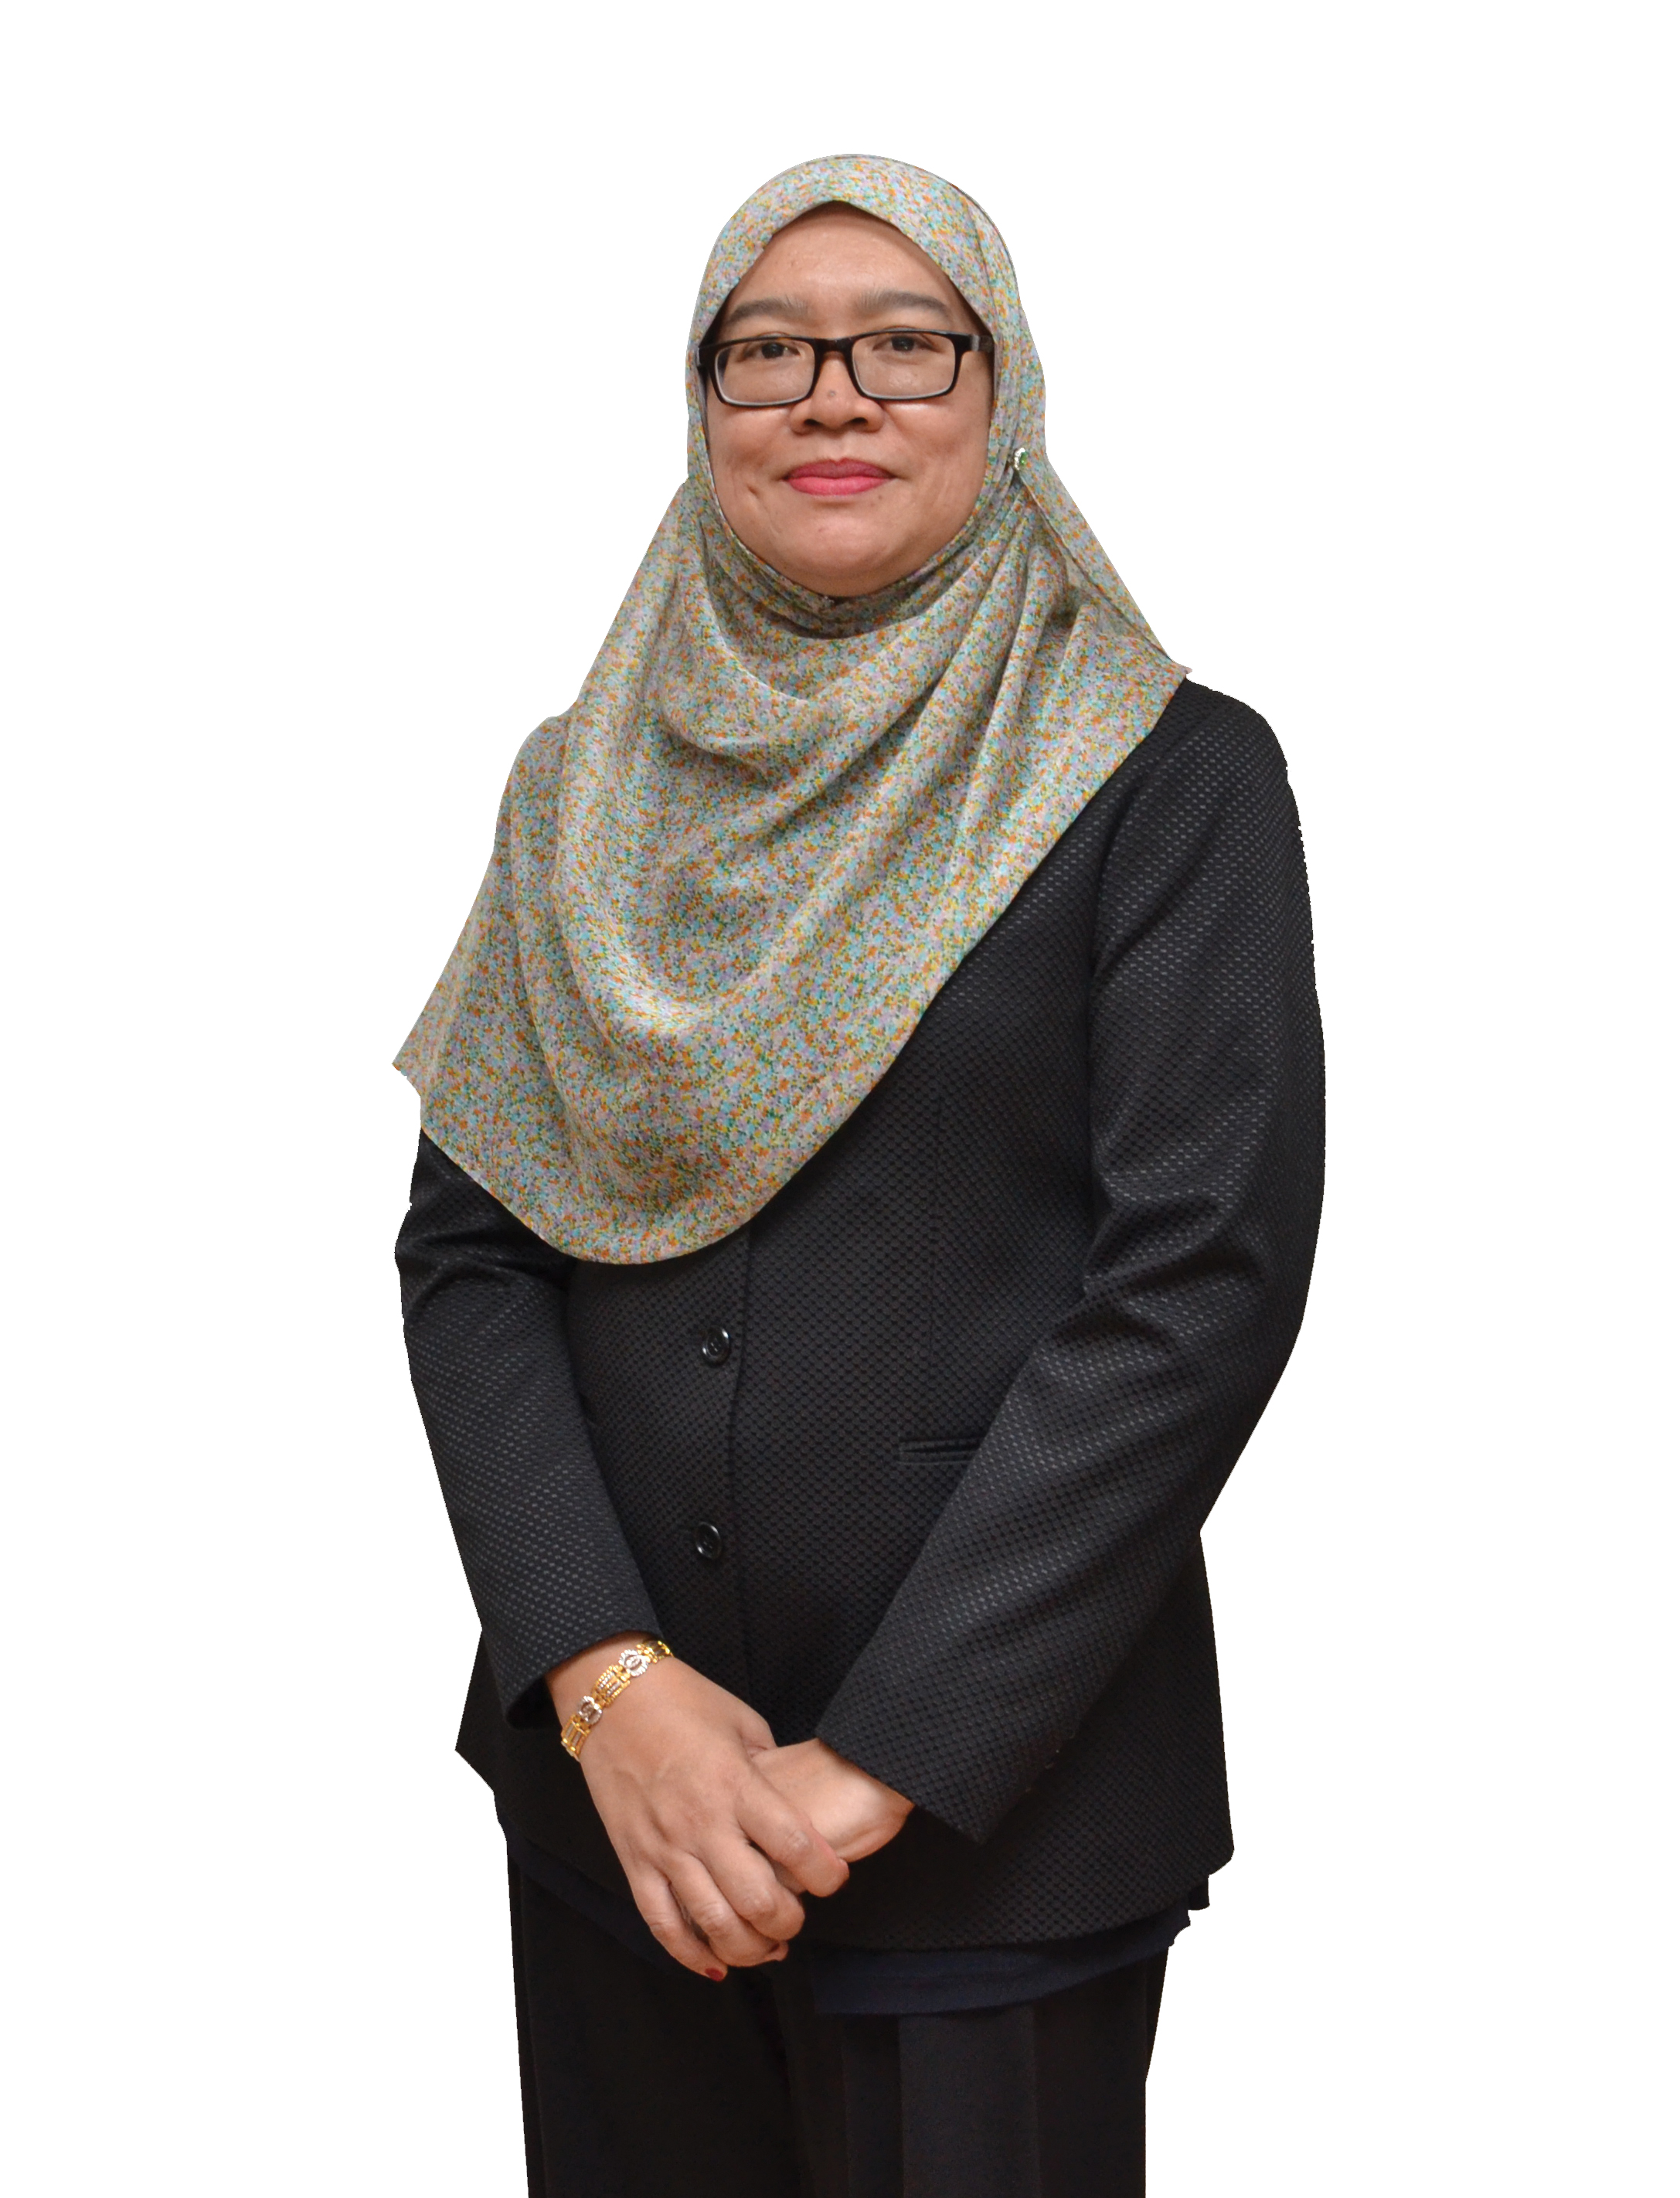 Dr Hayati Yaakup